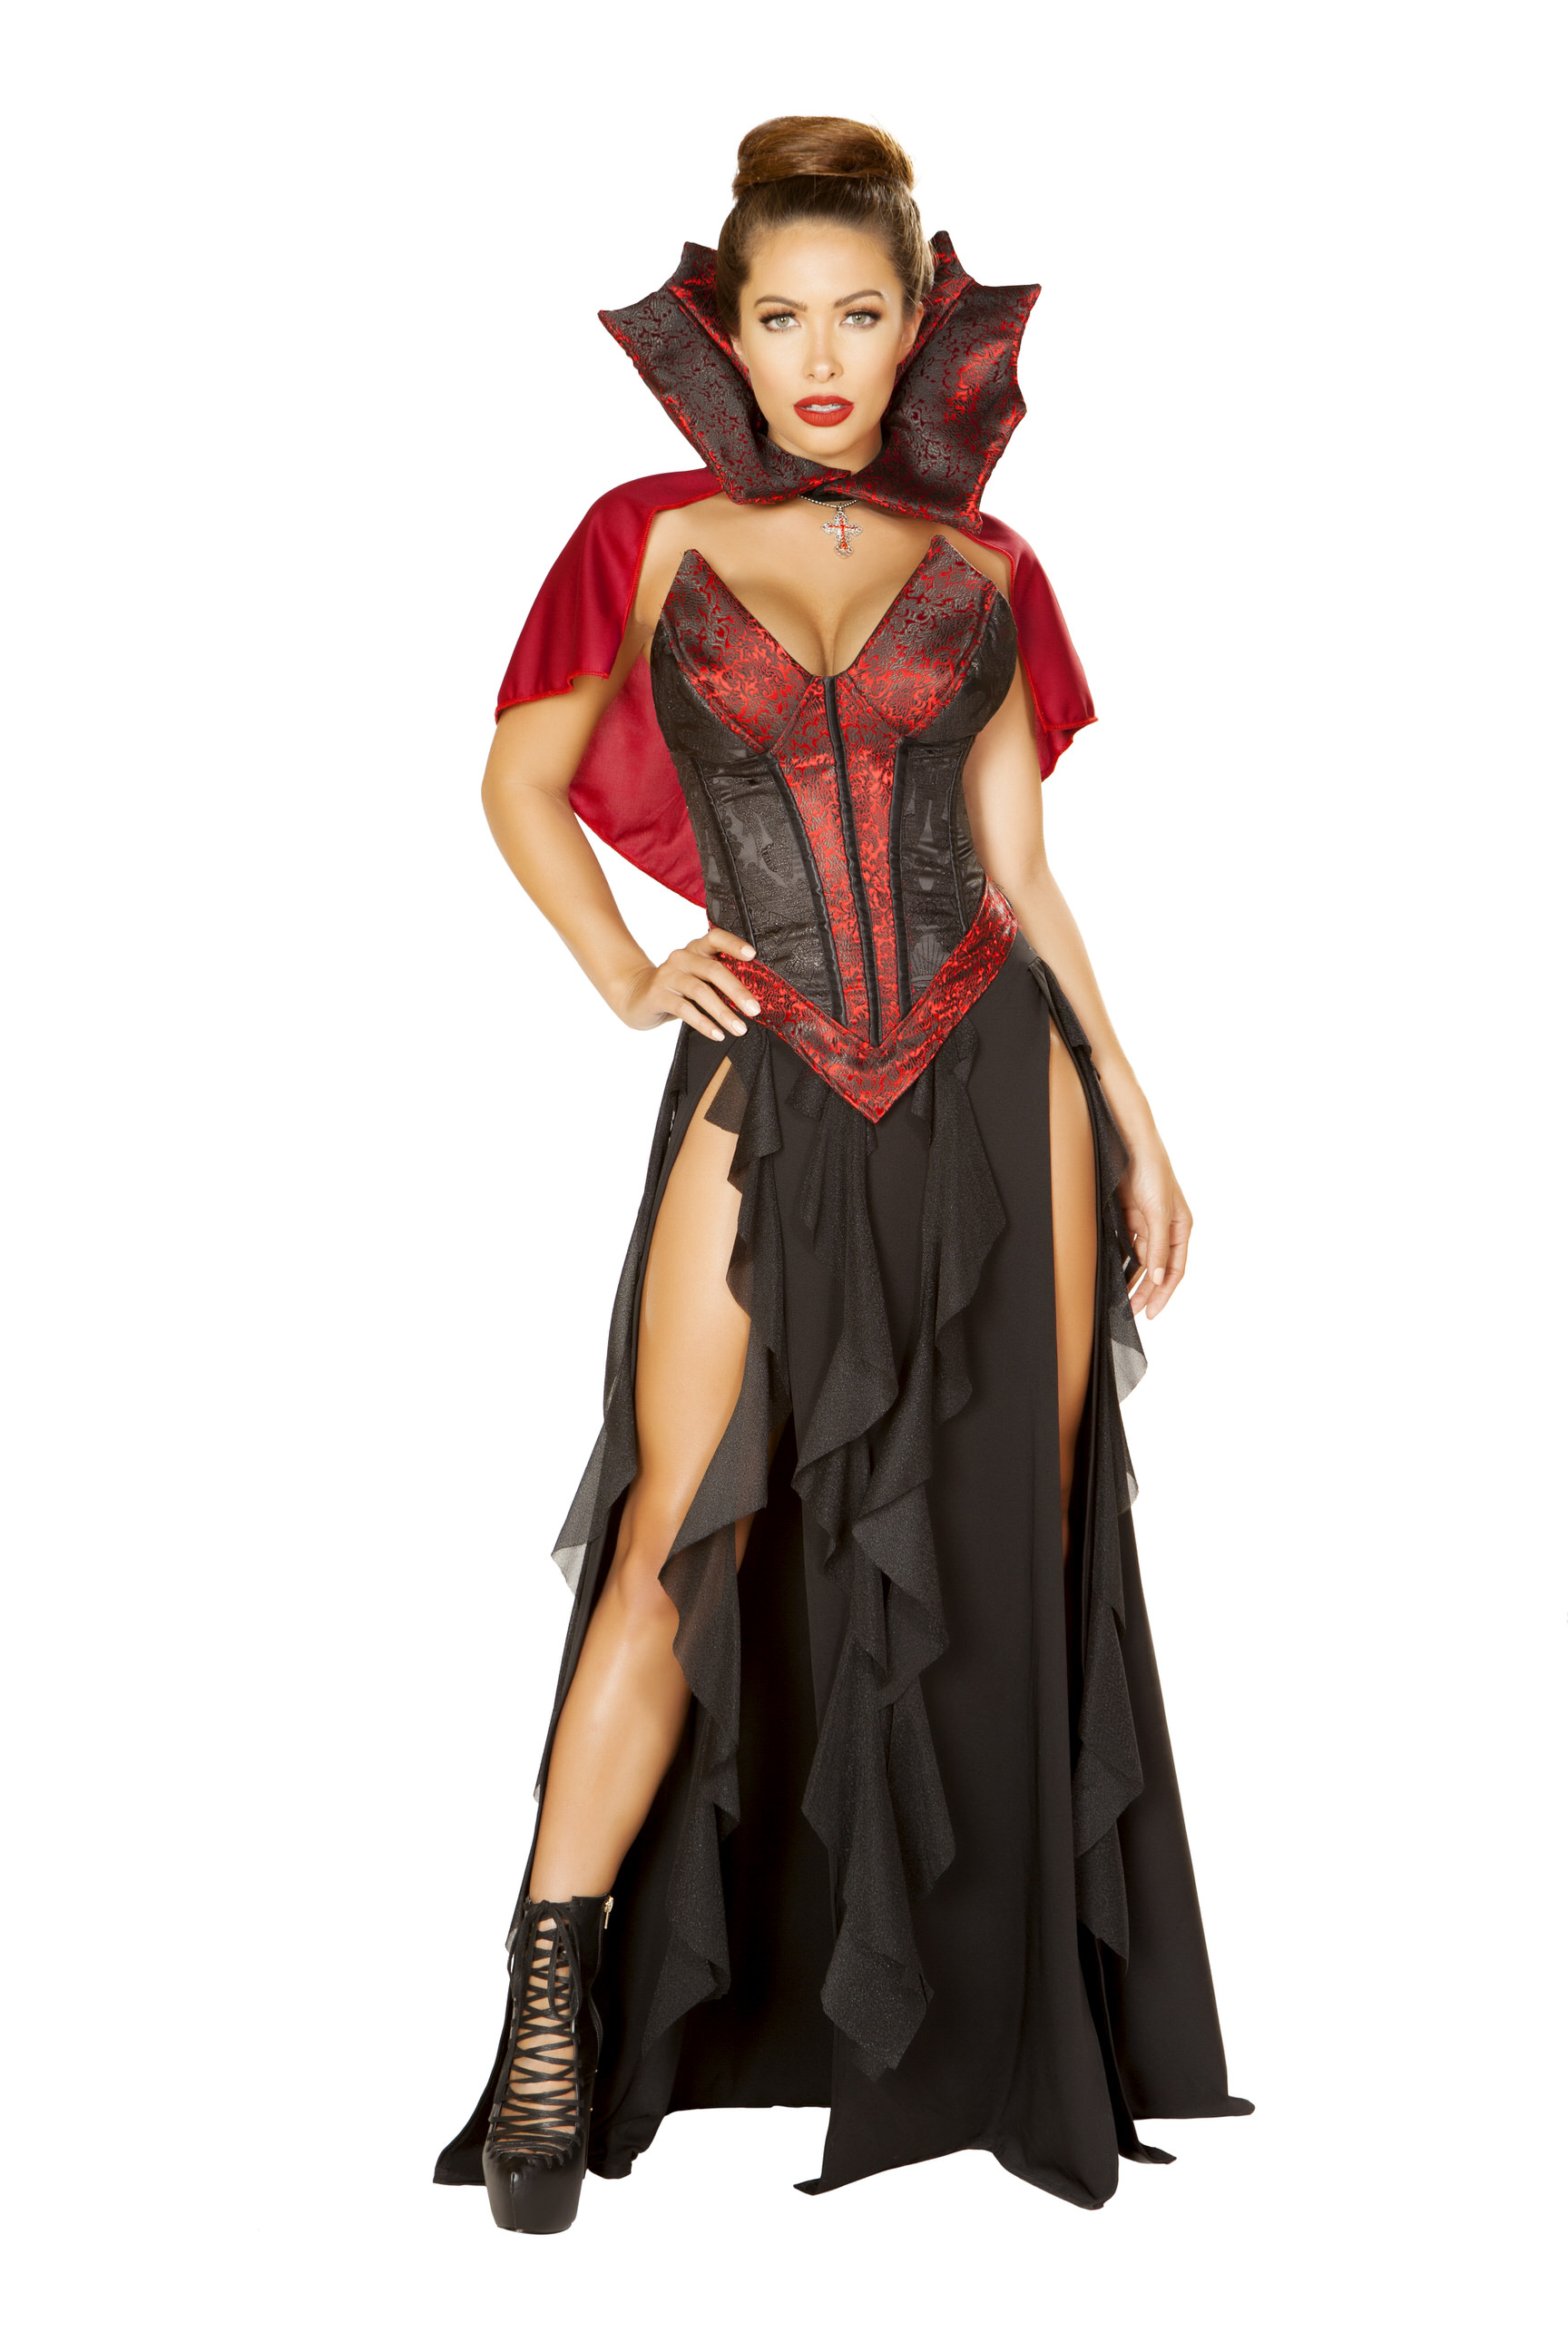 Roma Costume 3pc Blood Lusting Vampire, Red/Black, Large